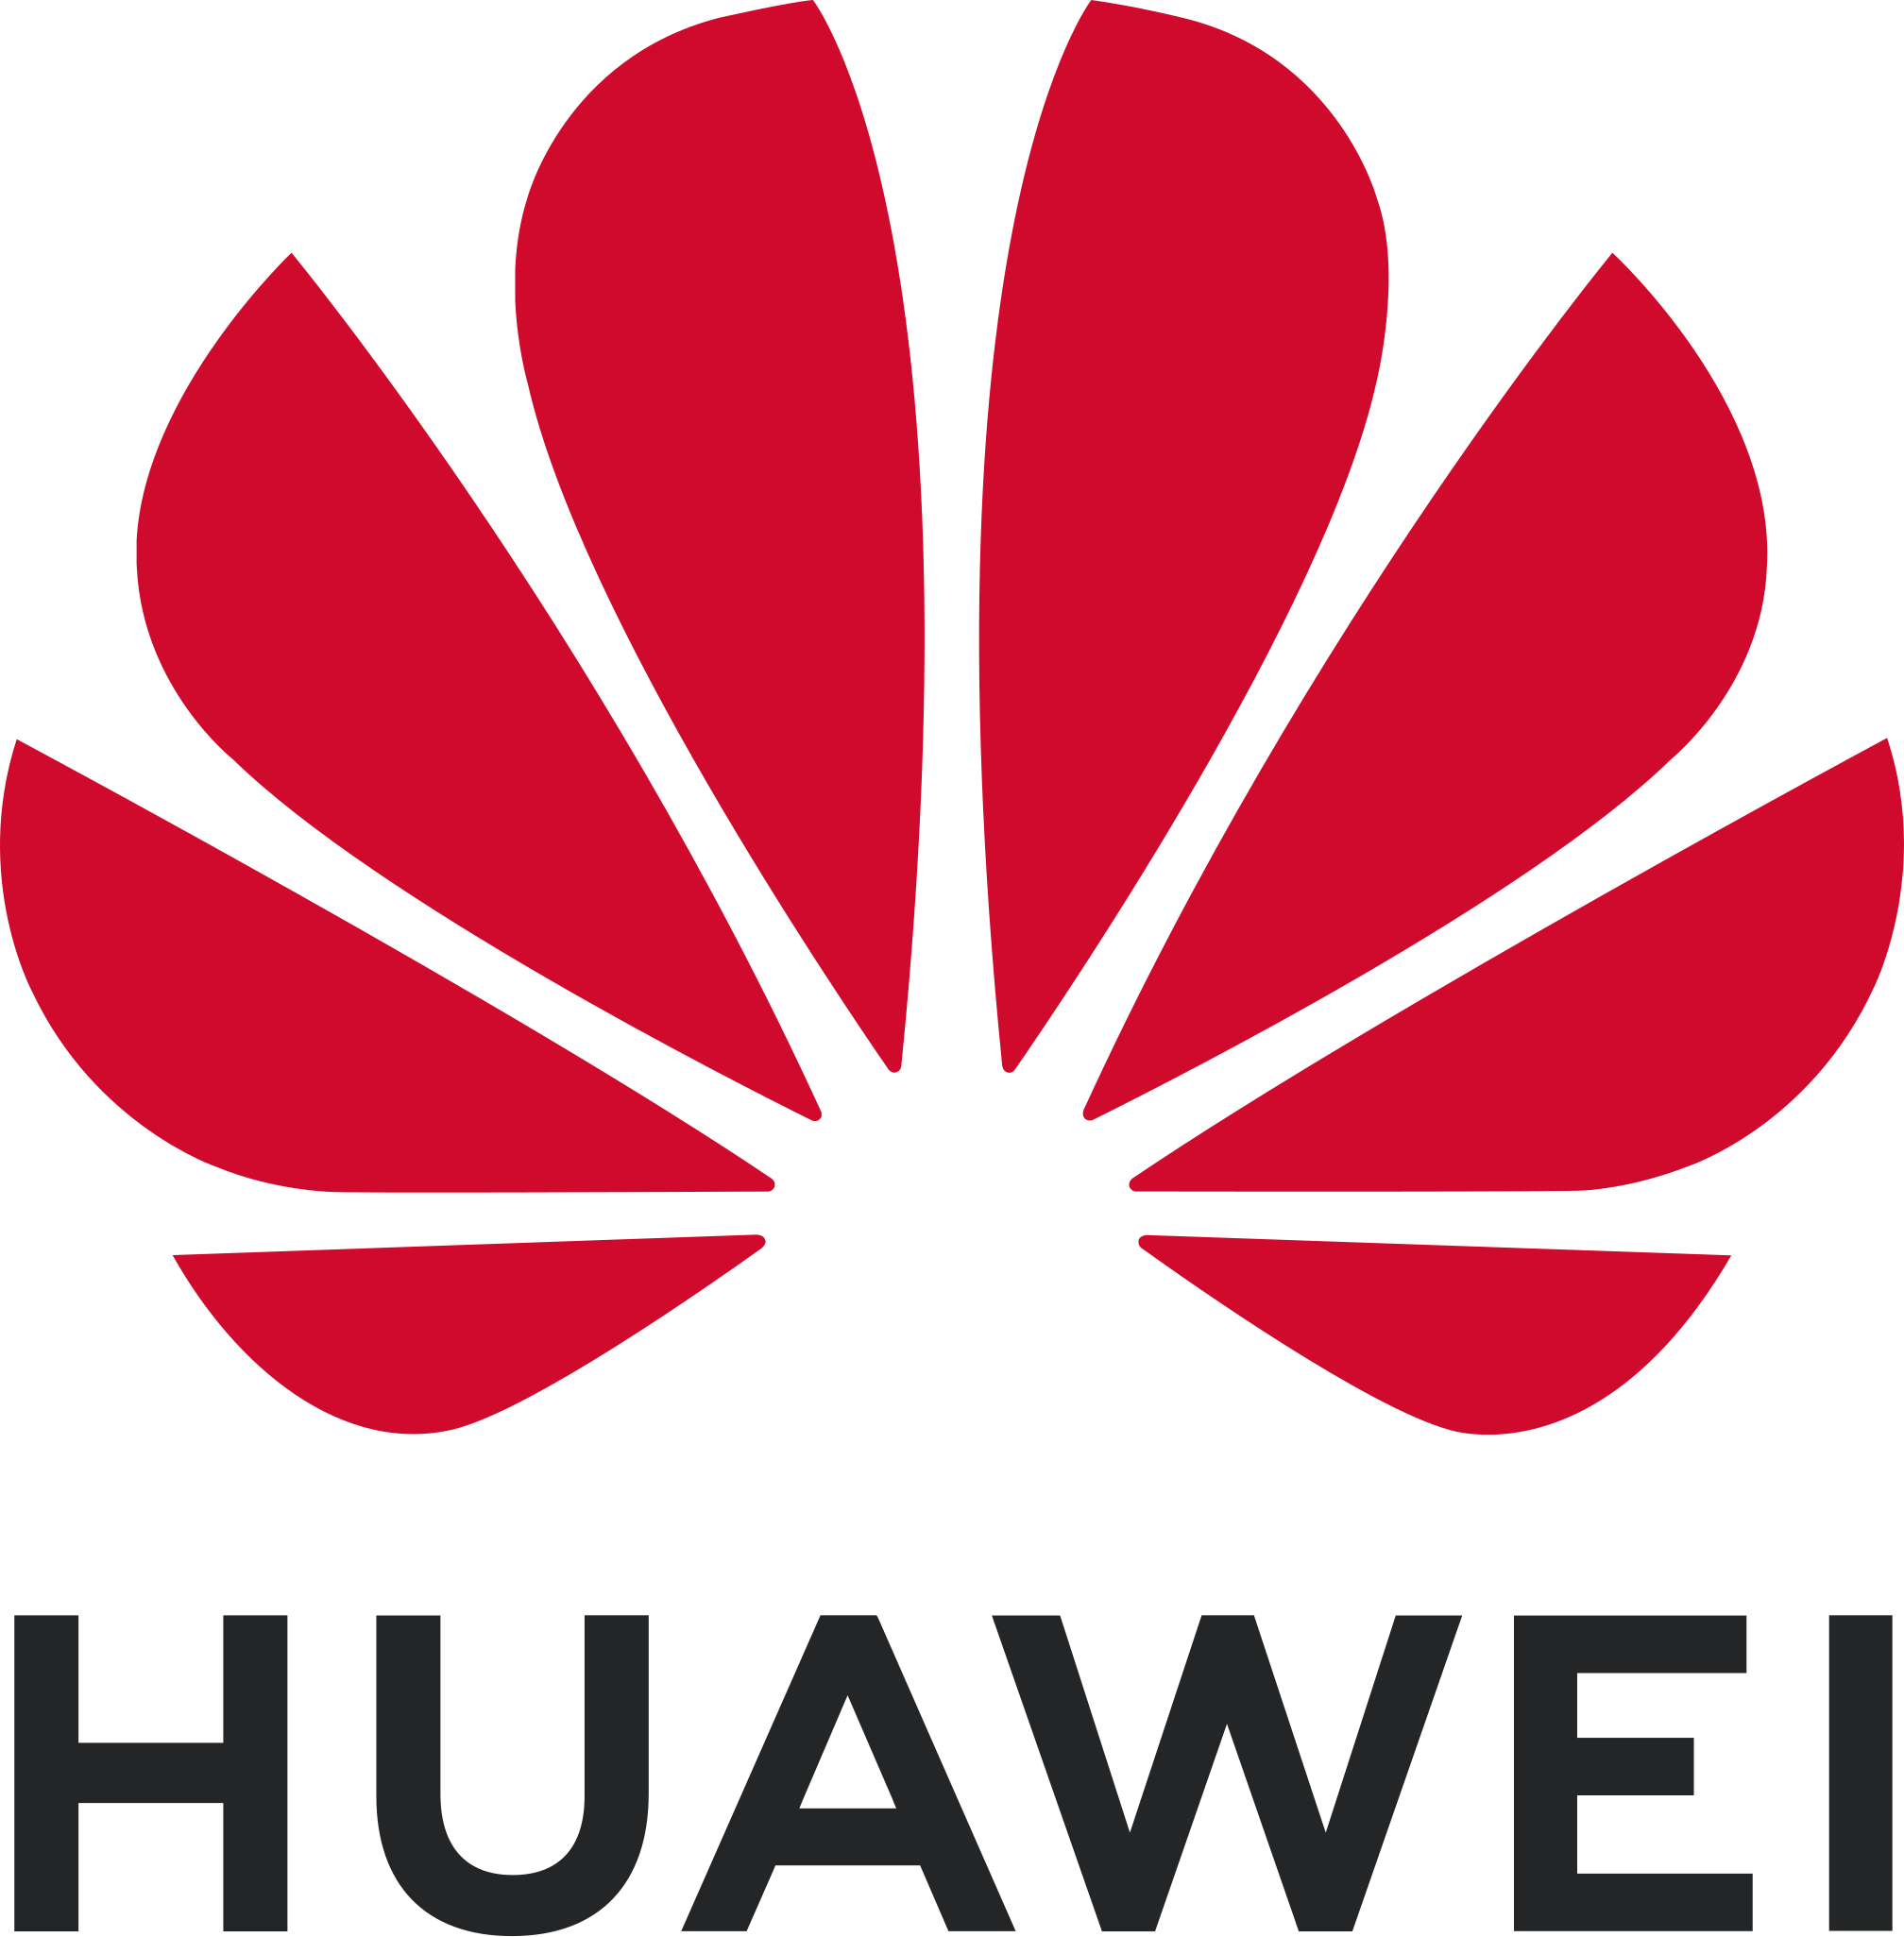 File:Huawei Standard logo.svg - Wikipedia